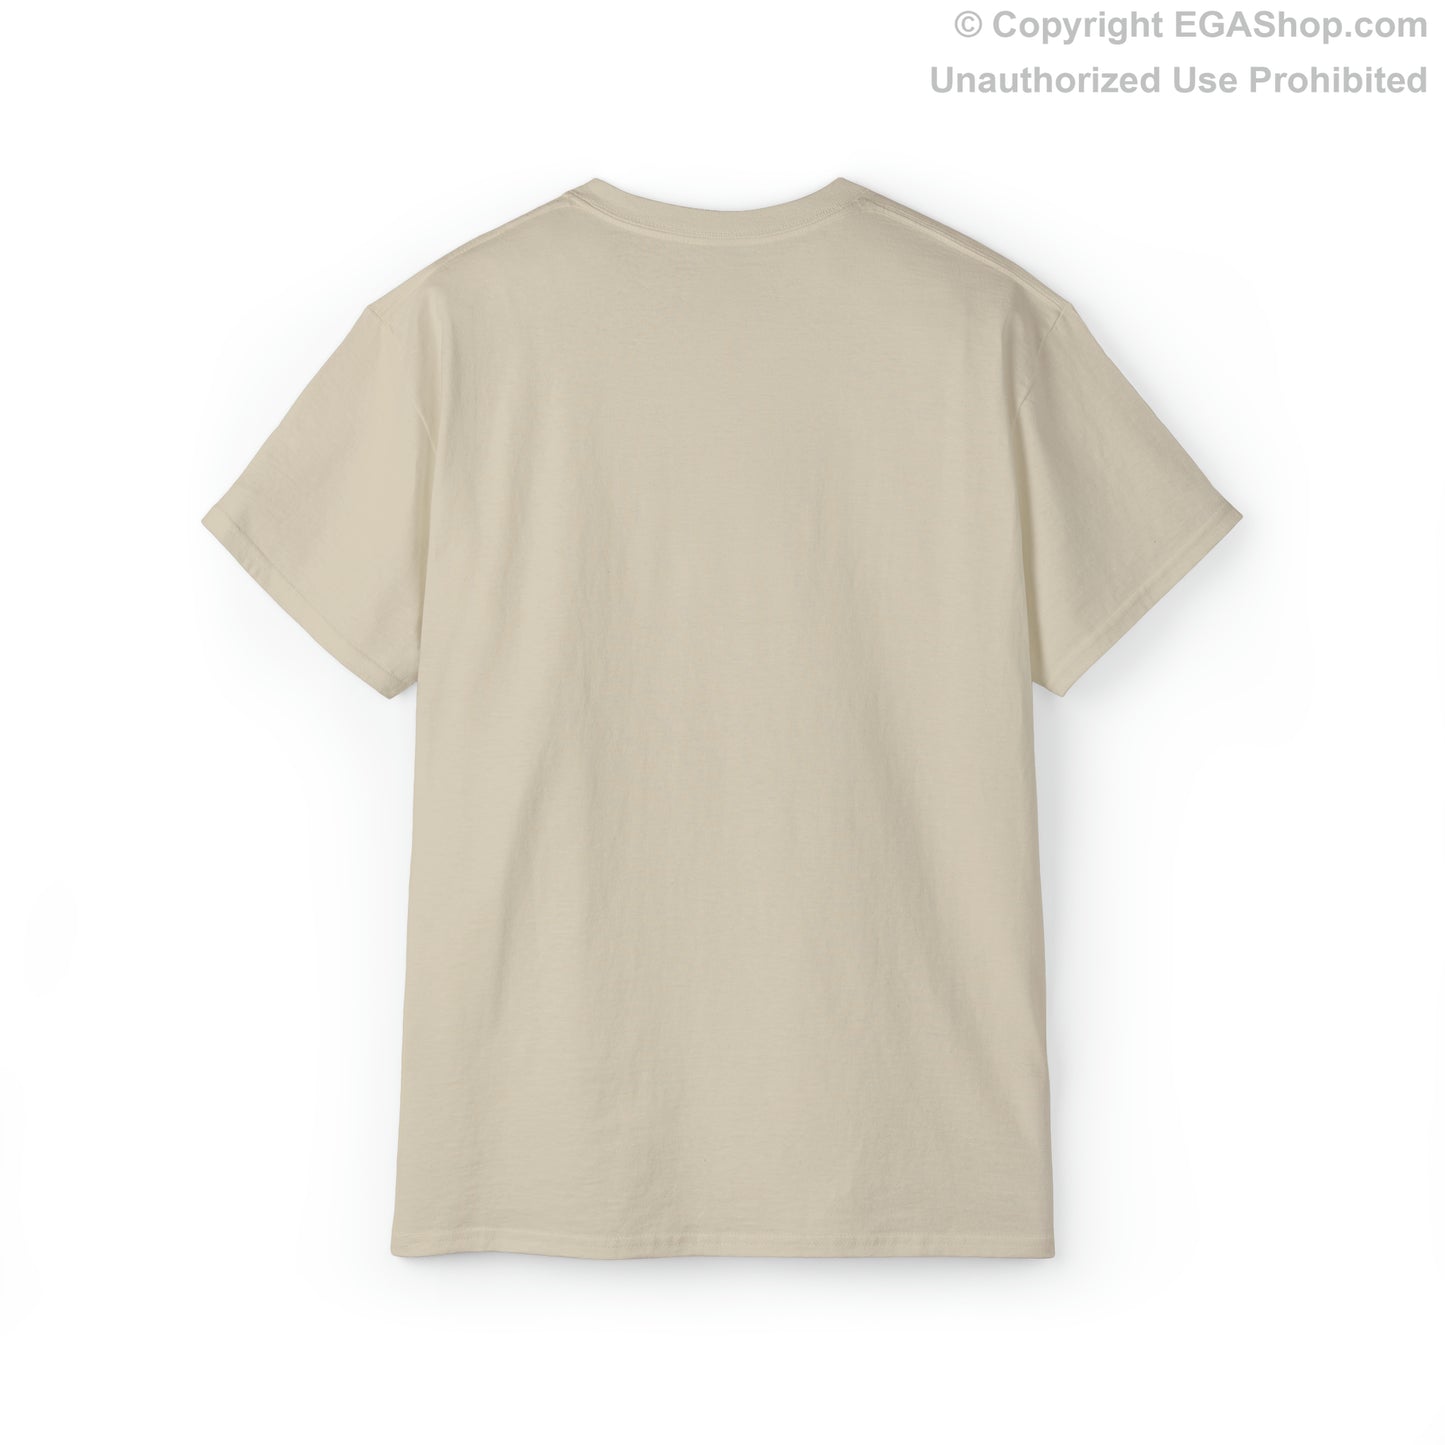 T-Shirt: Kilo Co. MCRD Parris Island (EGA, Blank Back)